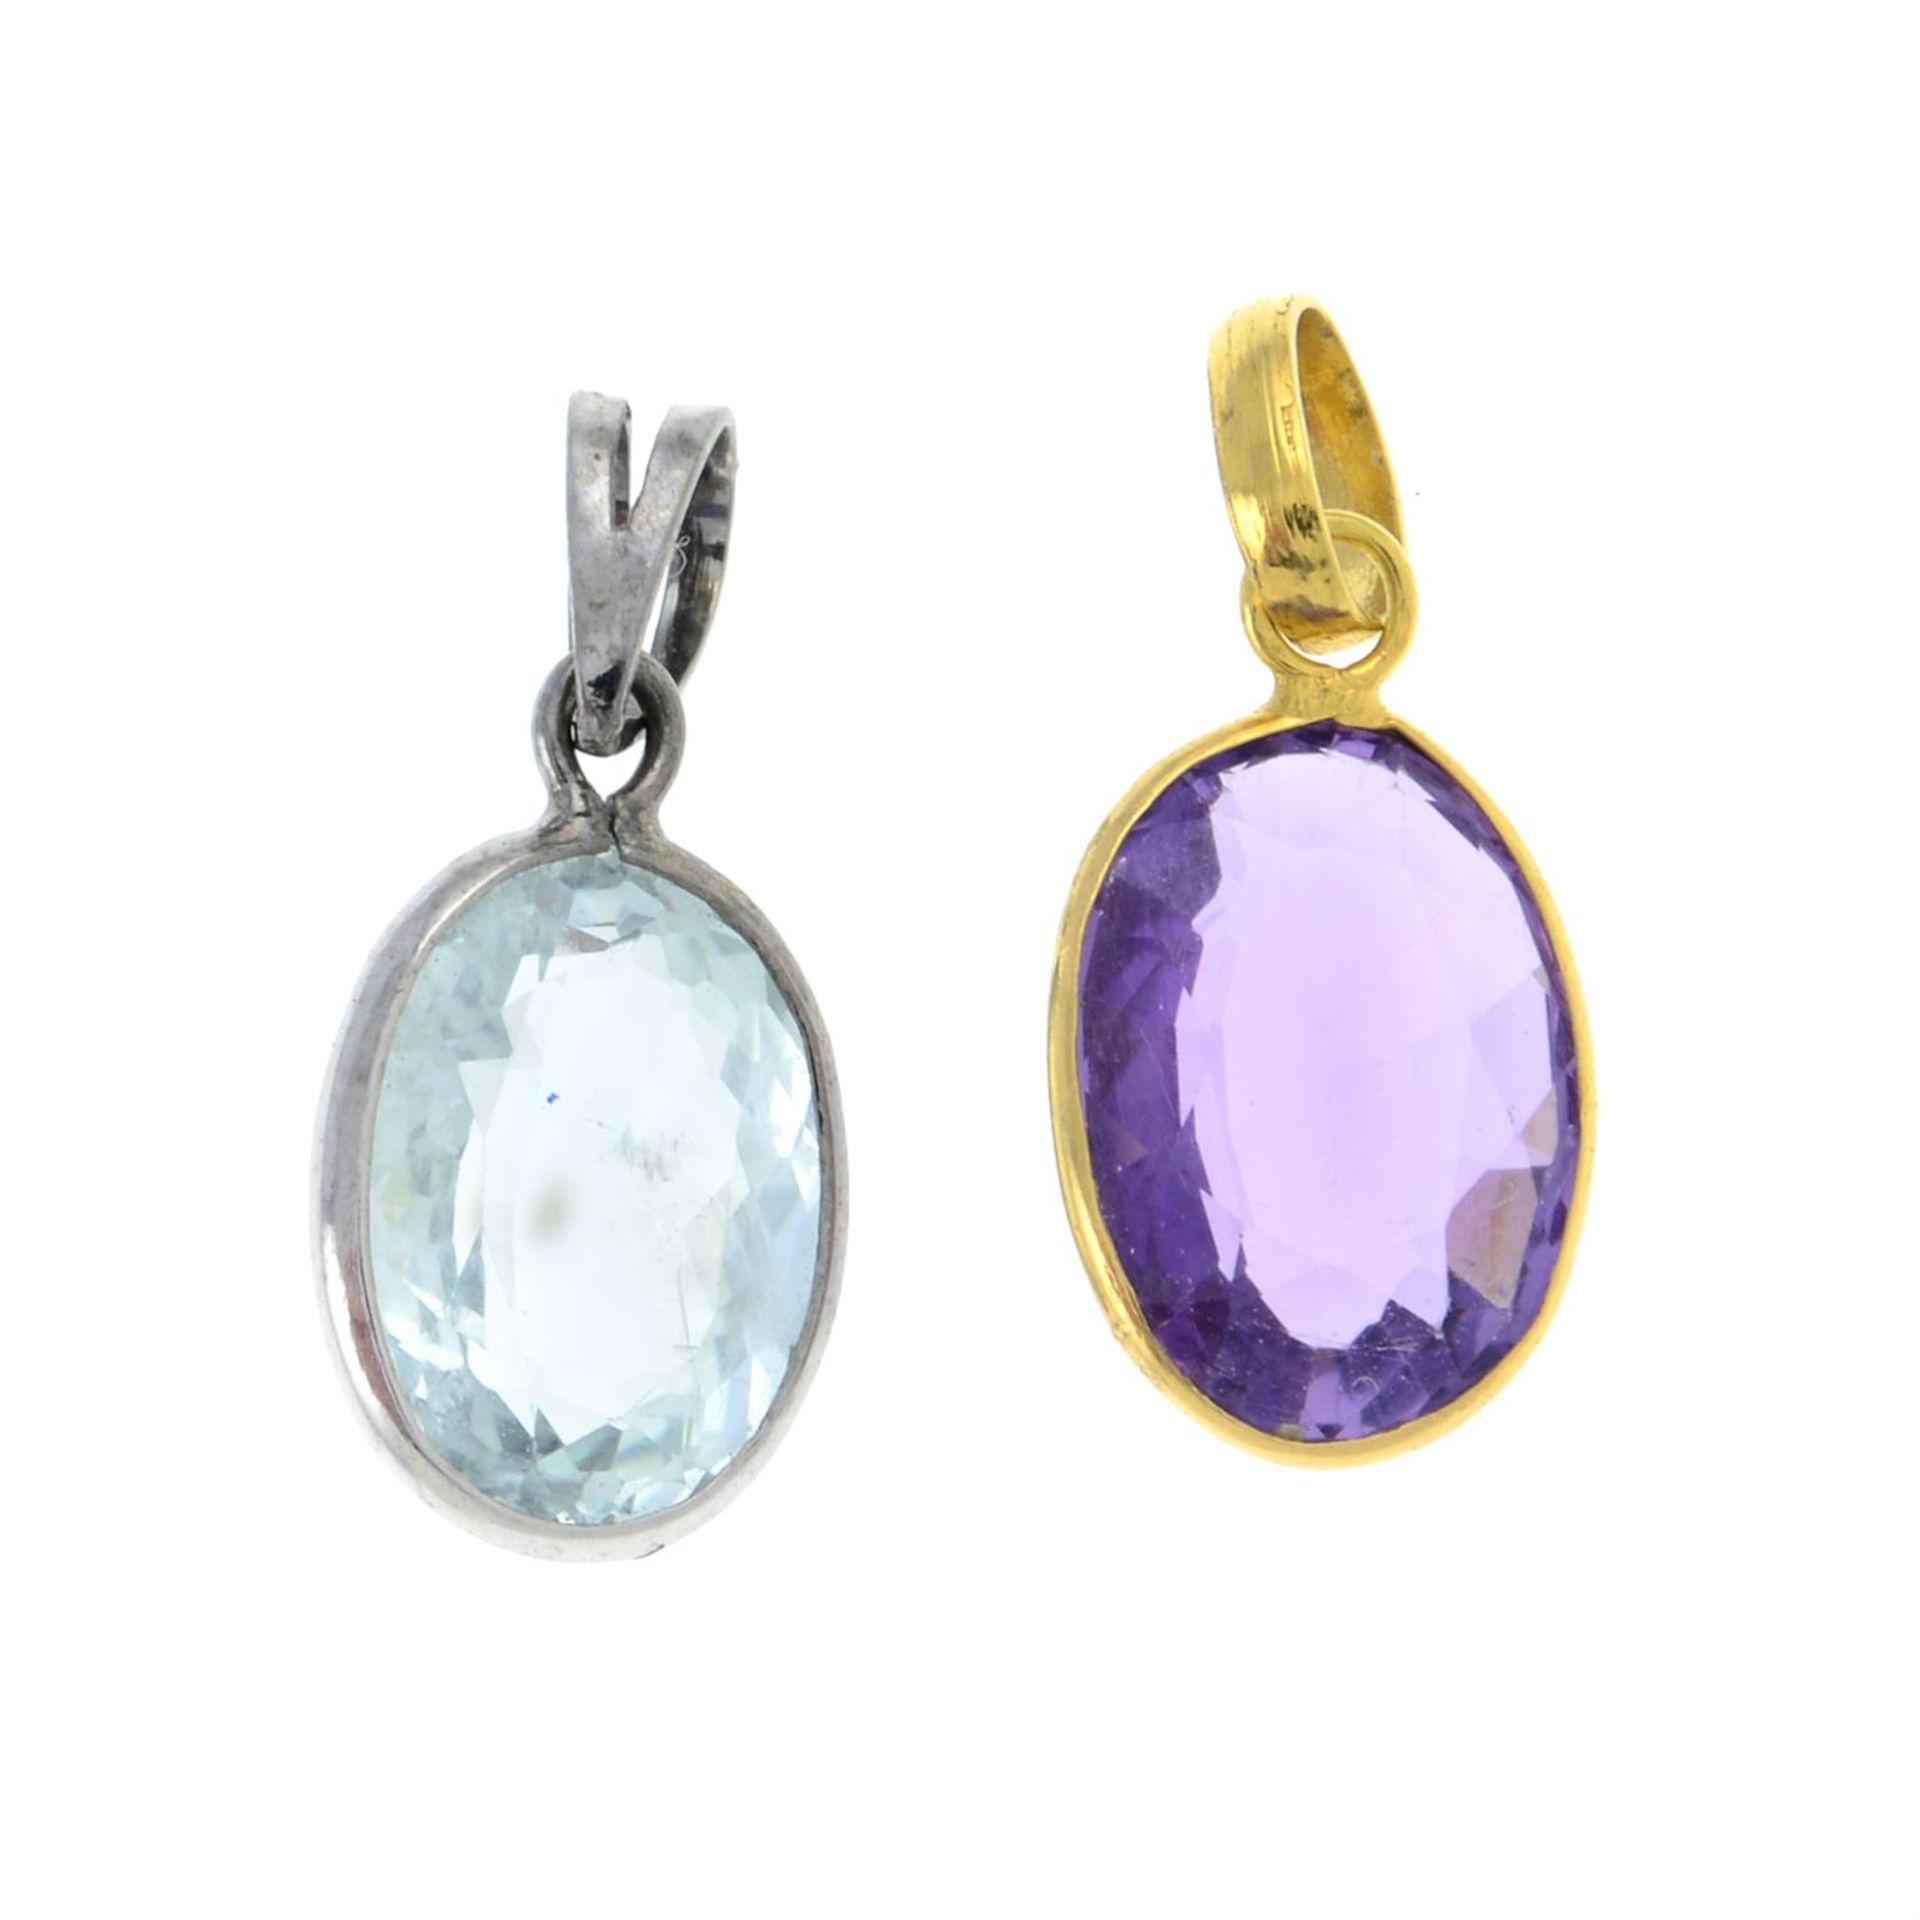 An aquamarine single-stone pendant and an amethyst single-stone pendant.